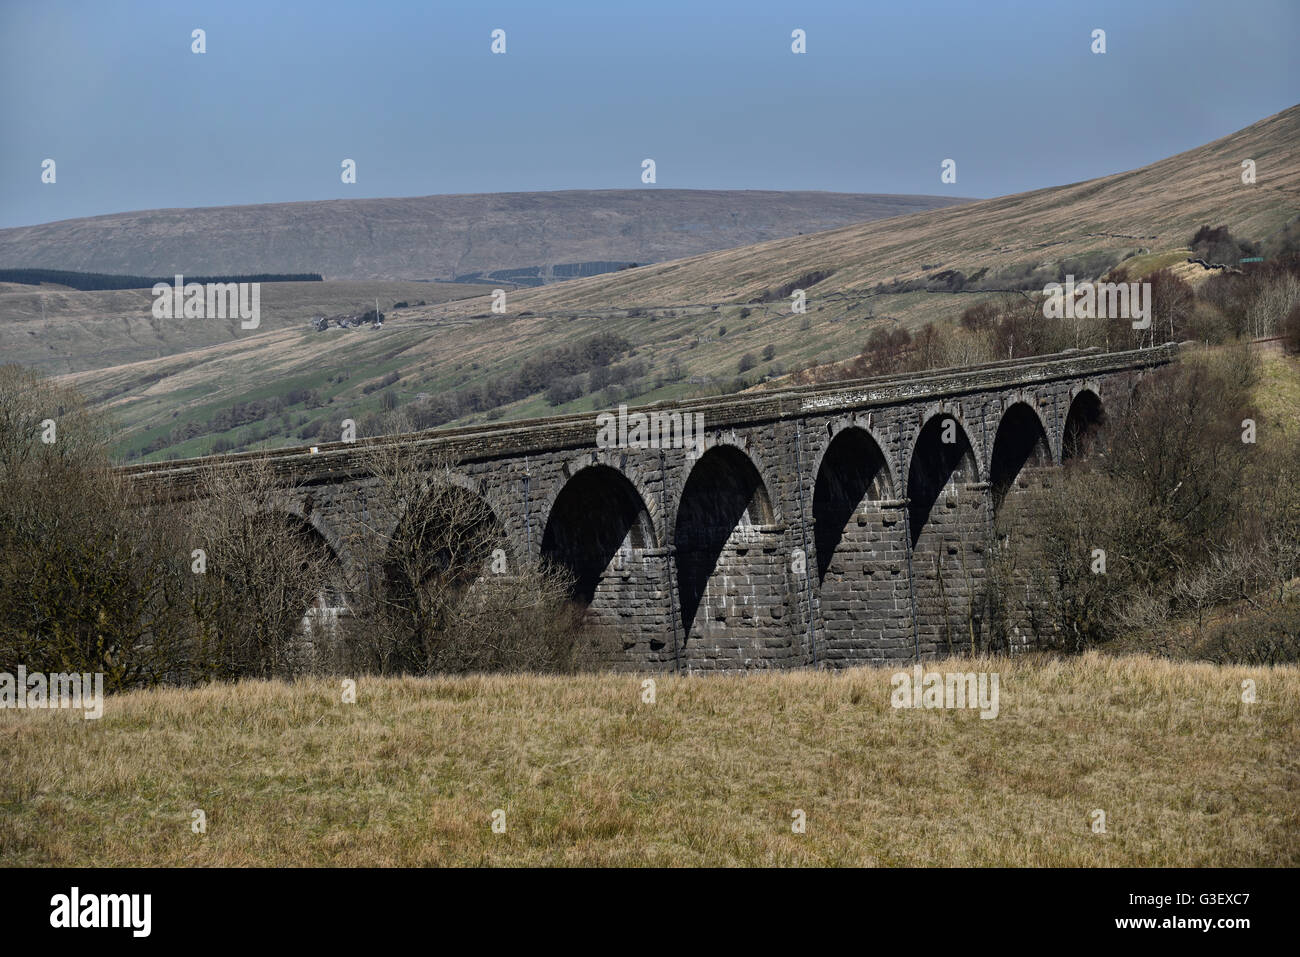 Railway viaduct, Dentdale, Settle - Carlisle line, Cumbria, Yorkshire Dales, England, UK. Stock Photo